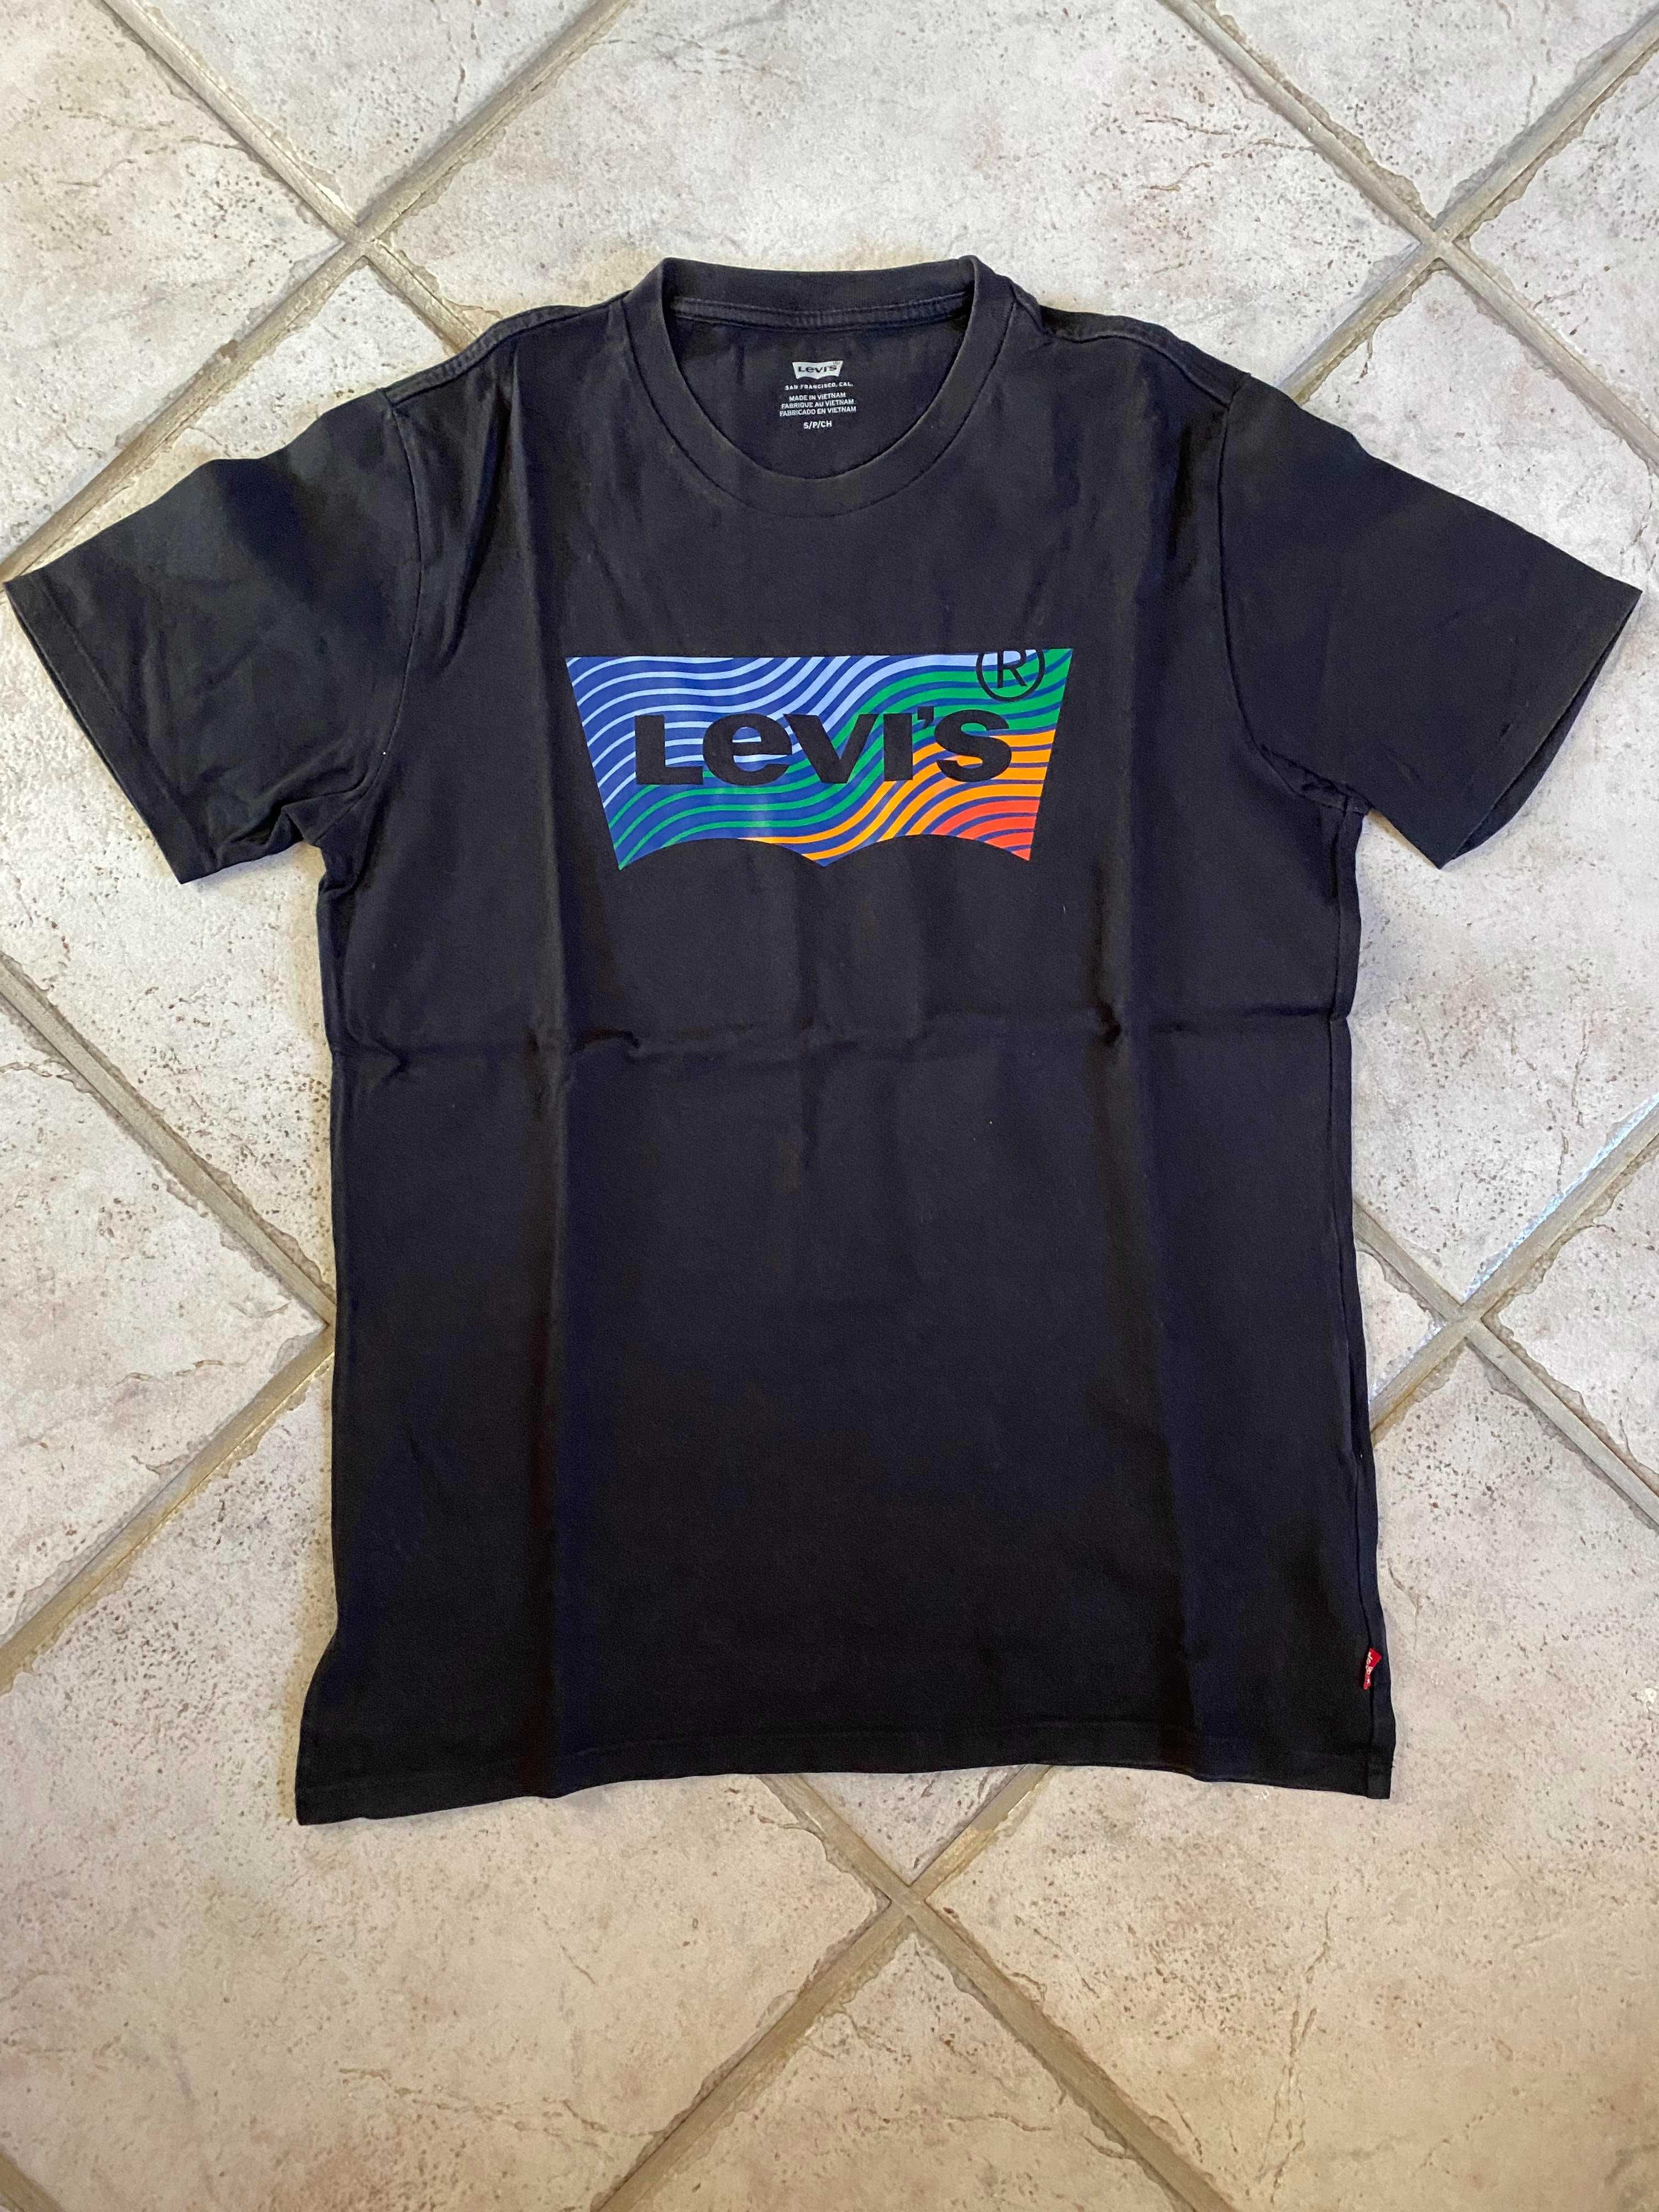 T-shirt da Levis diferenciada